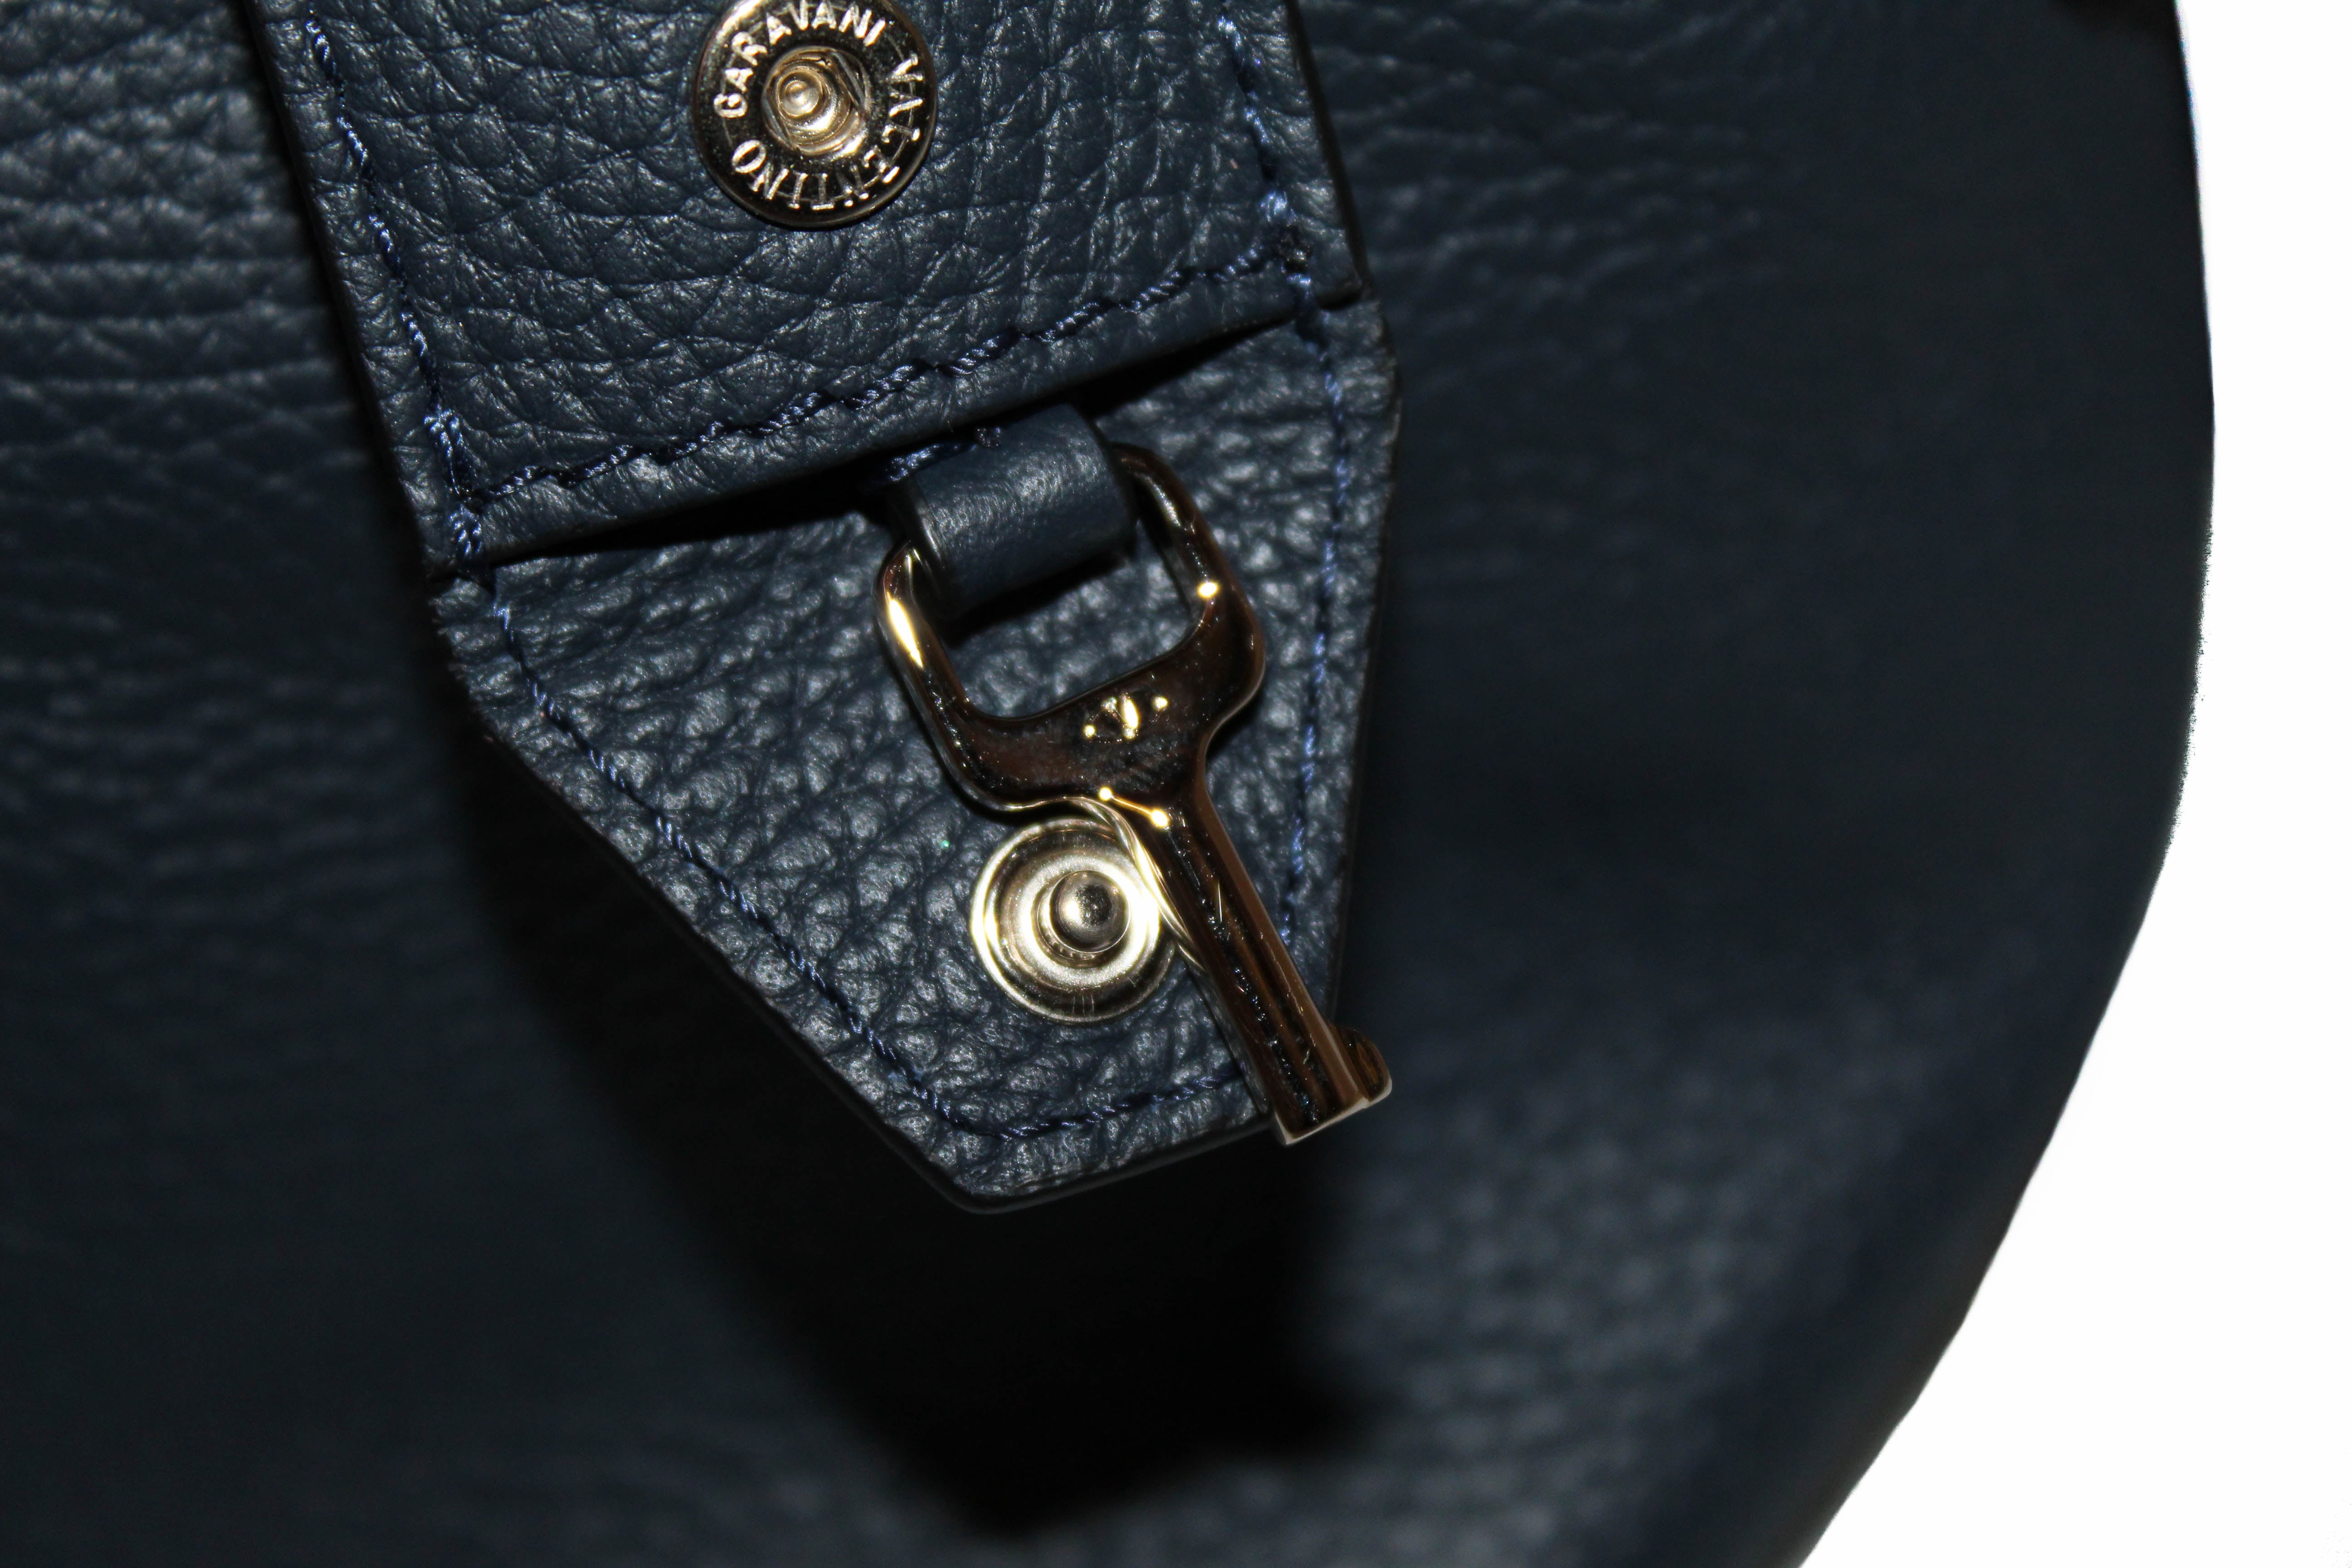 Authentic New Valentino Garavani Navy Blue Twiny Backpack